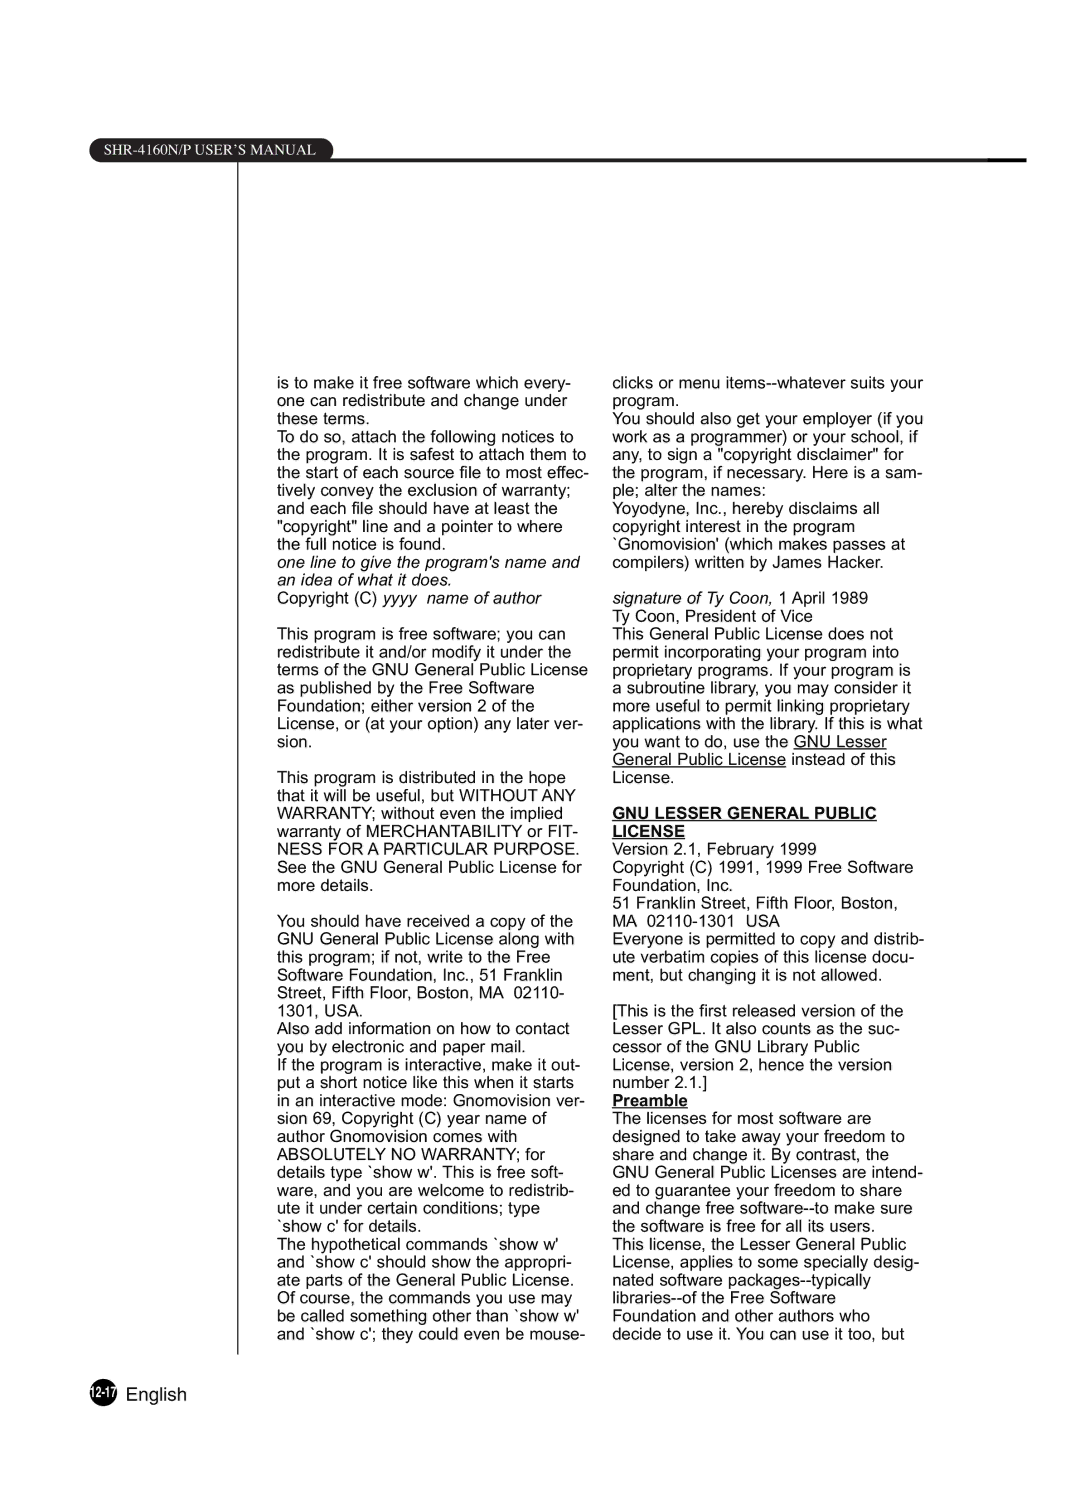 Samsung SHR-4160P manual 12-17English, GNU Lesser General Public License 